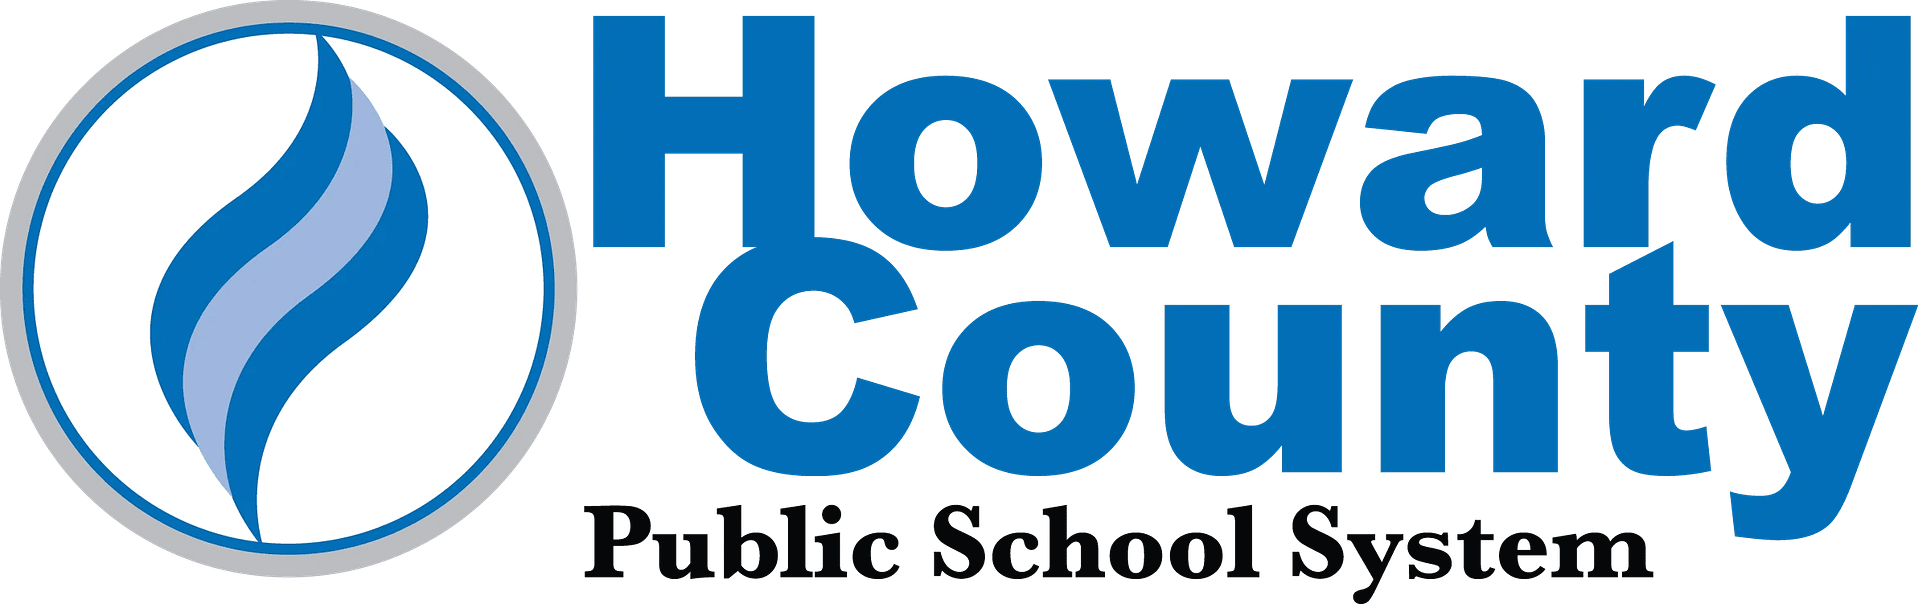 HCPSS logo